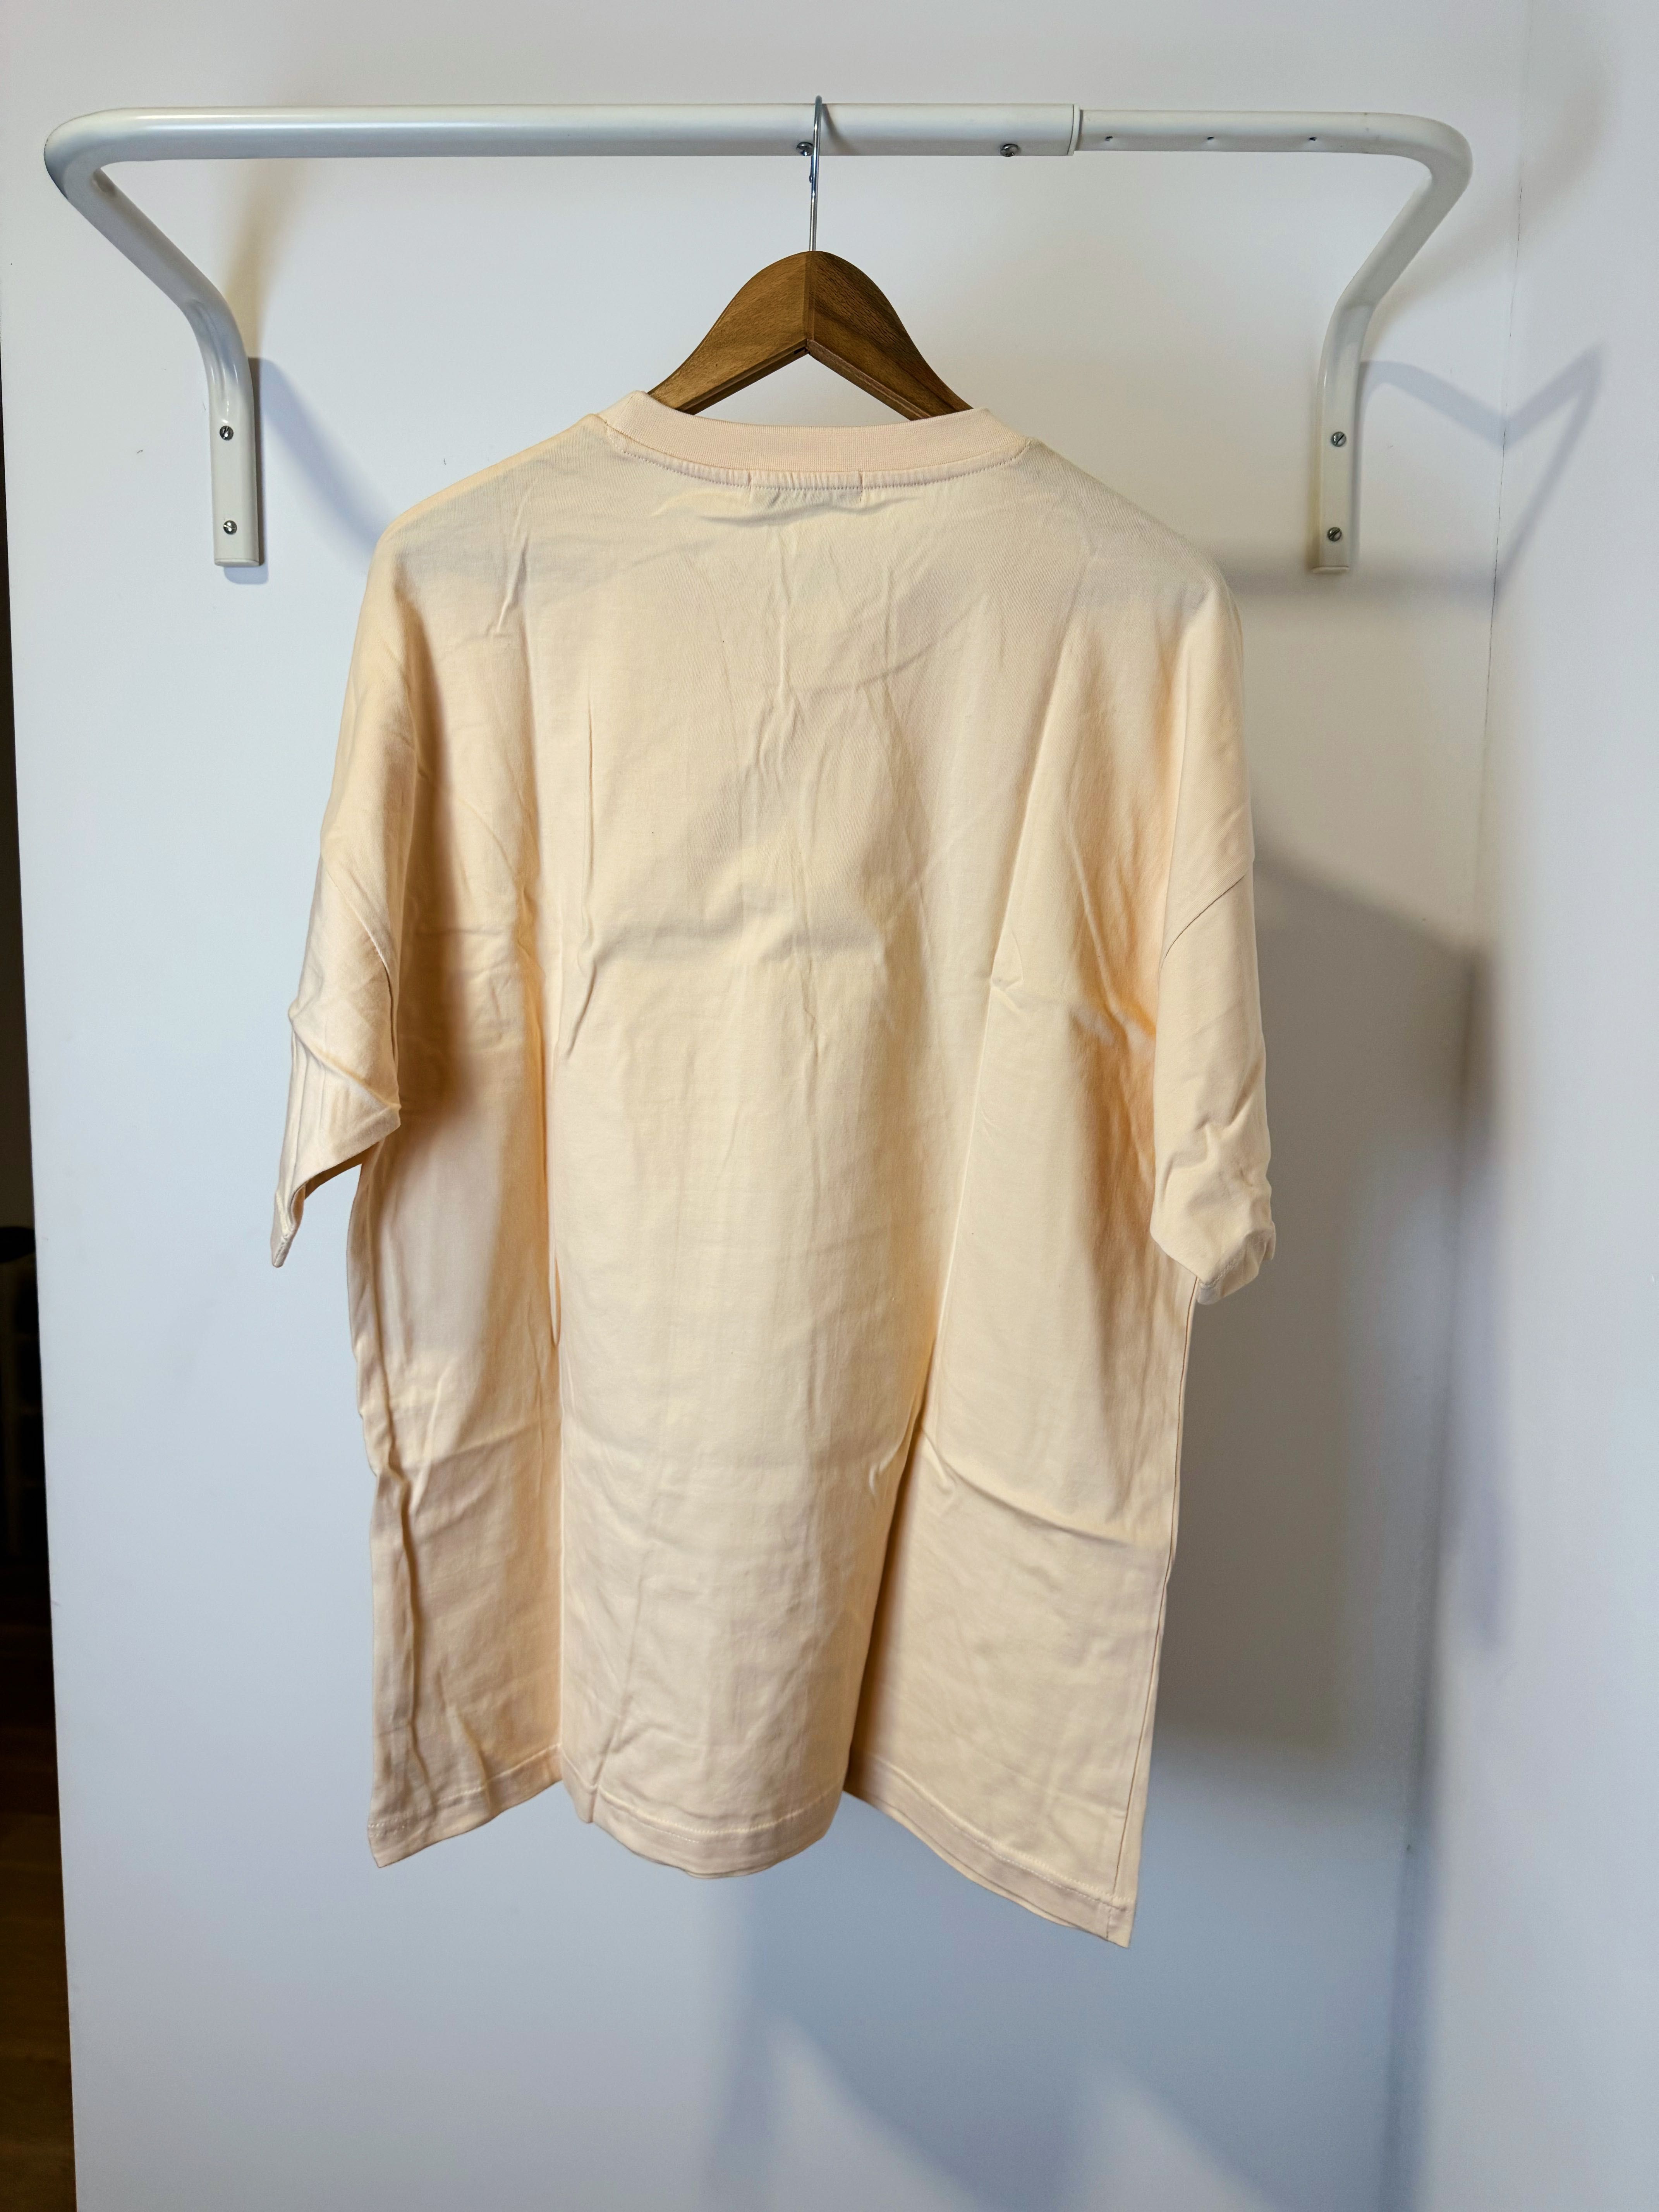 MNML Drop II Tee Pale Tan t-shirt koszulka M medium oversized